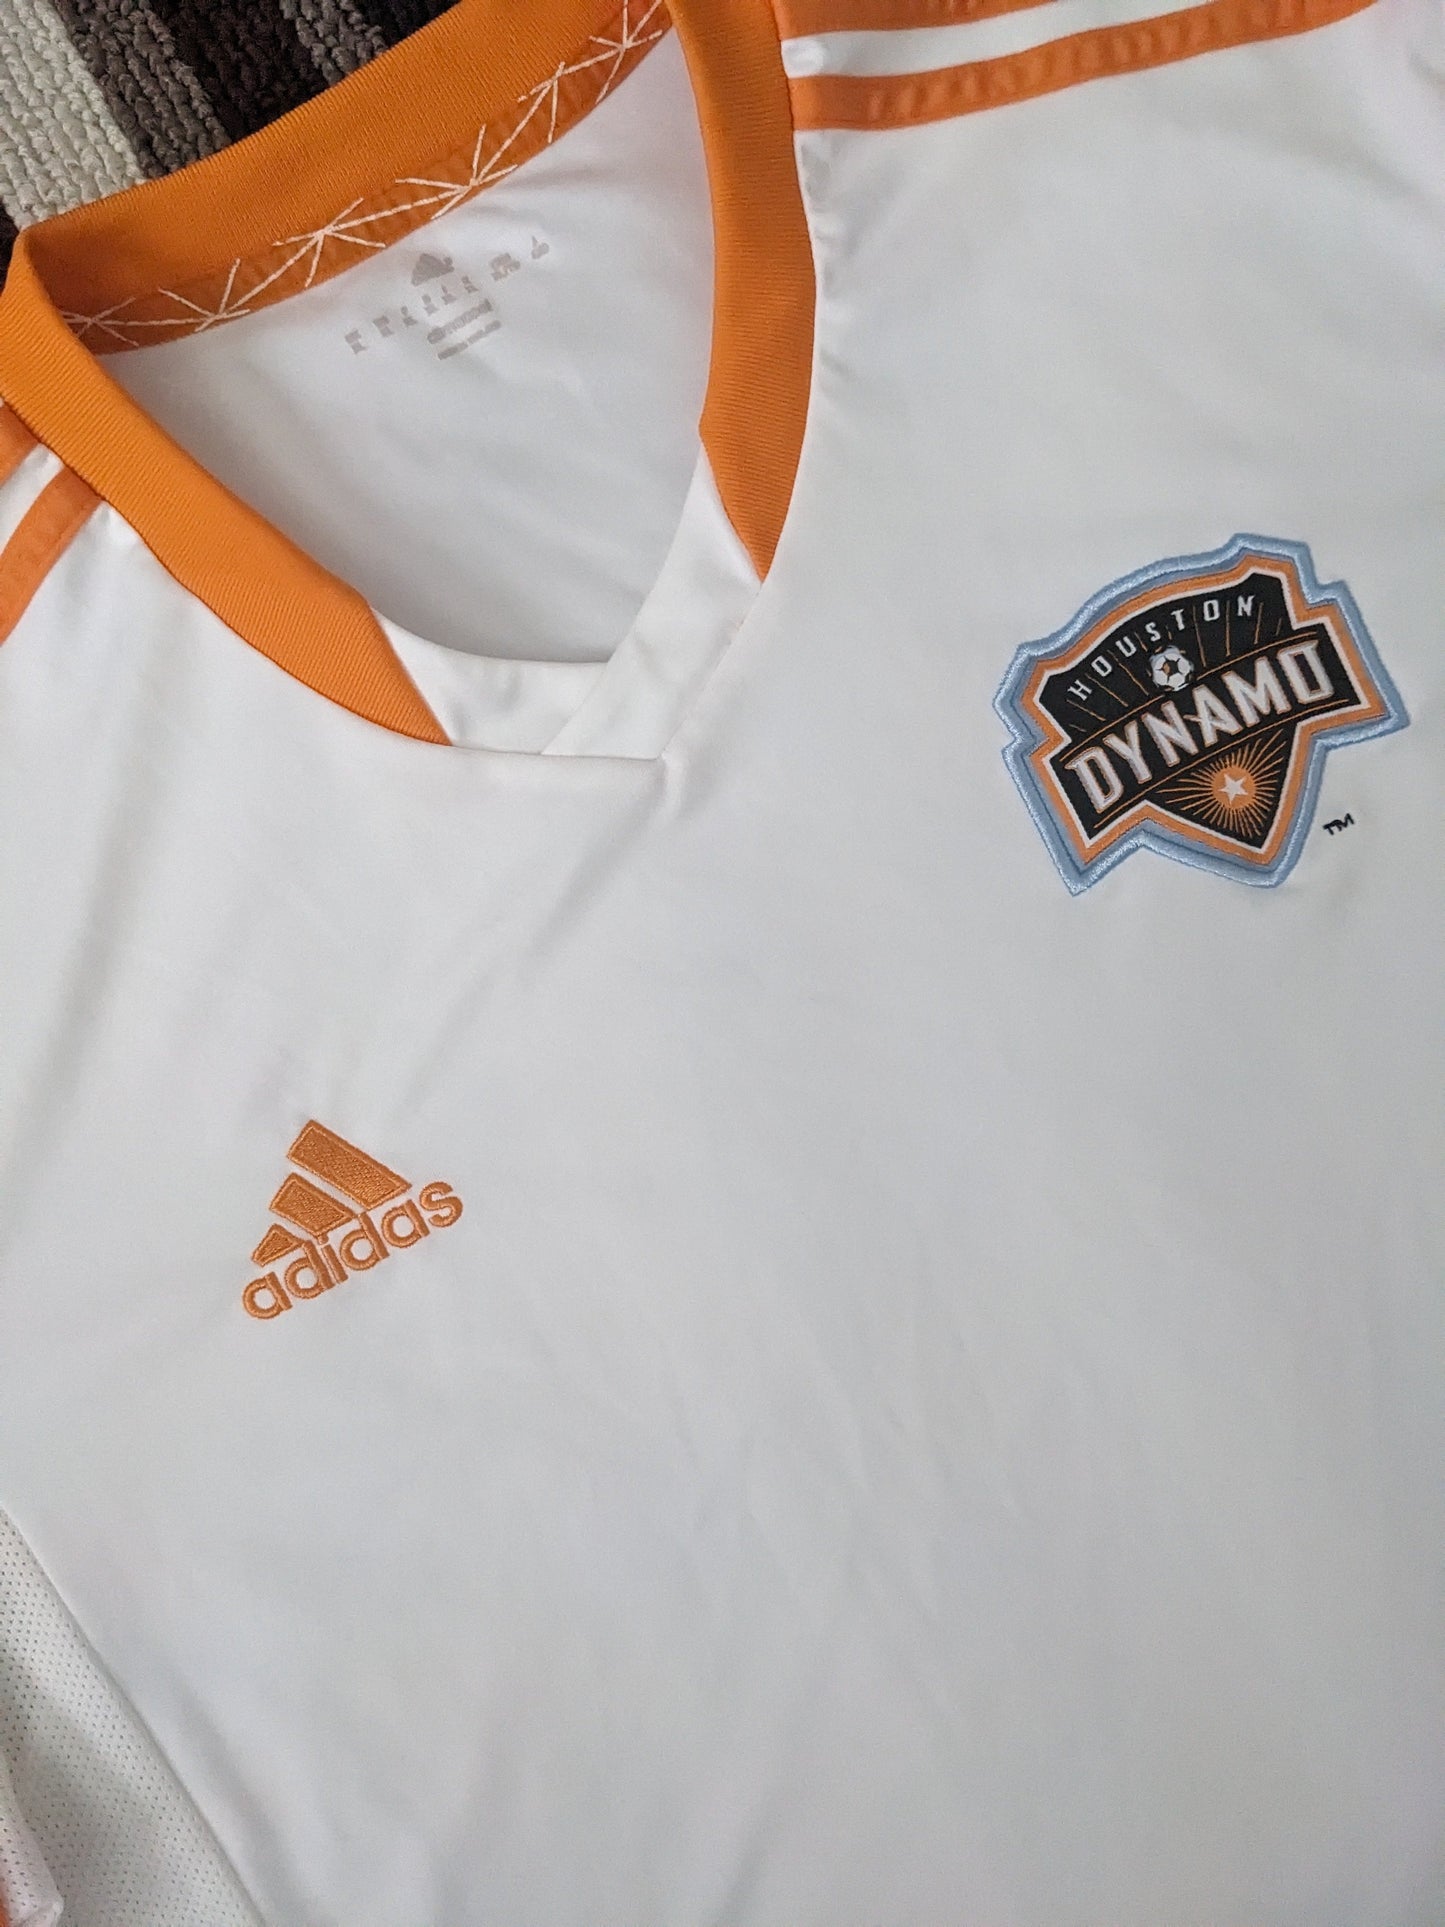 Houston Dynamo 2012/2014 Soccer Jersey (XL)